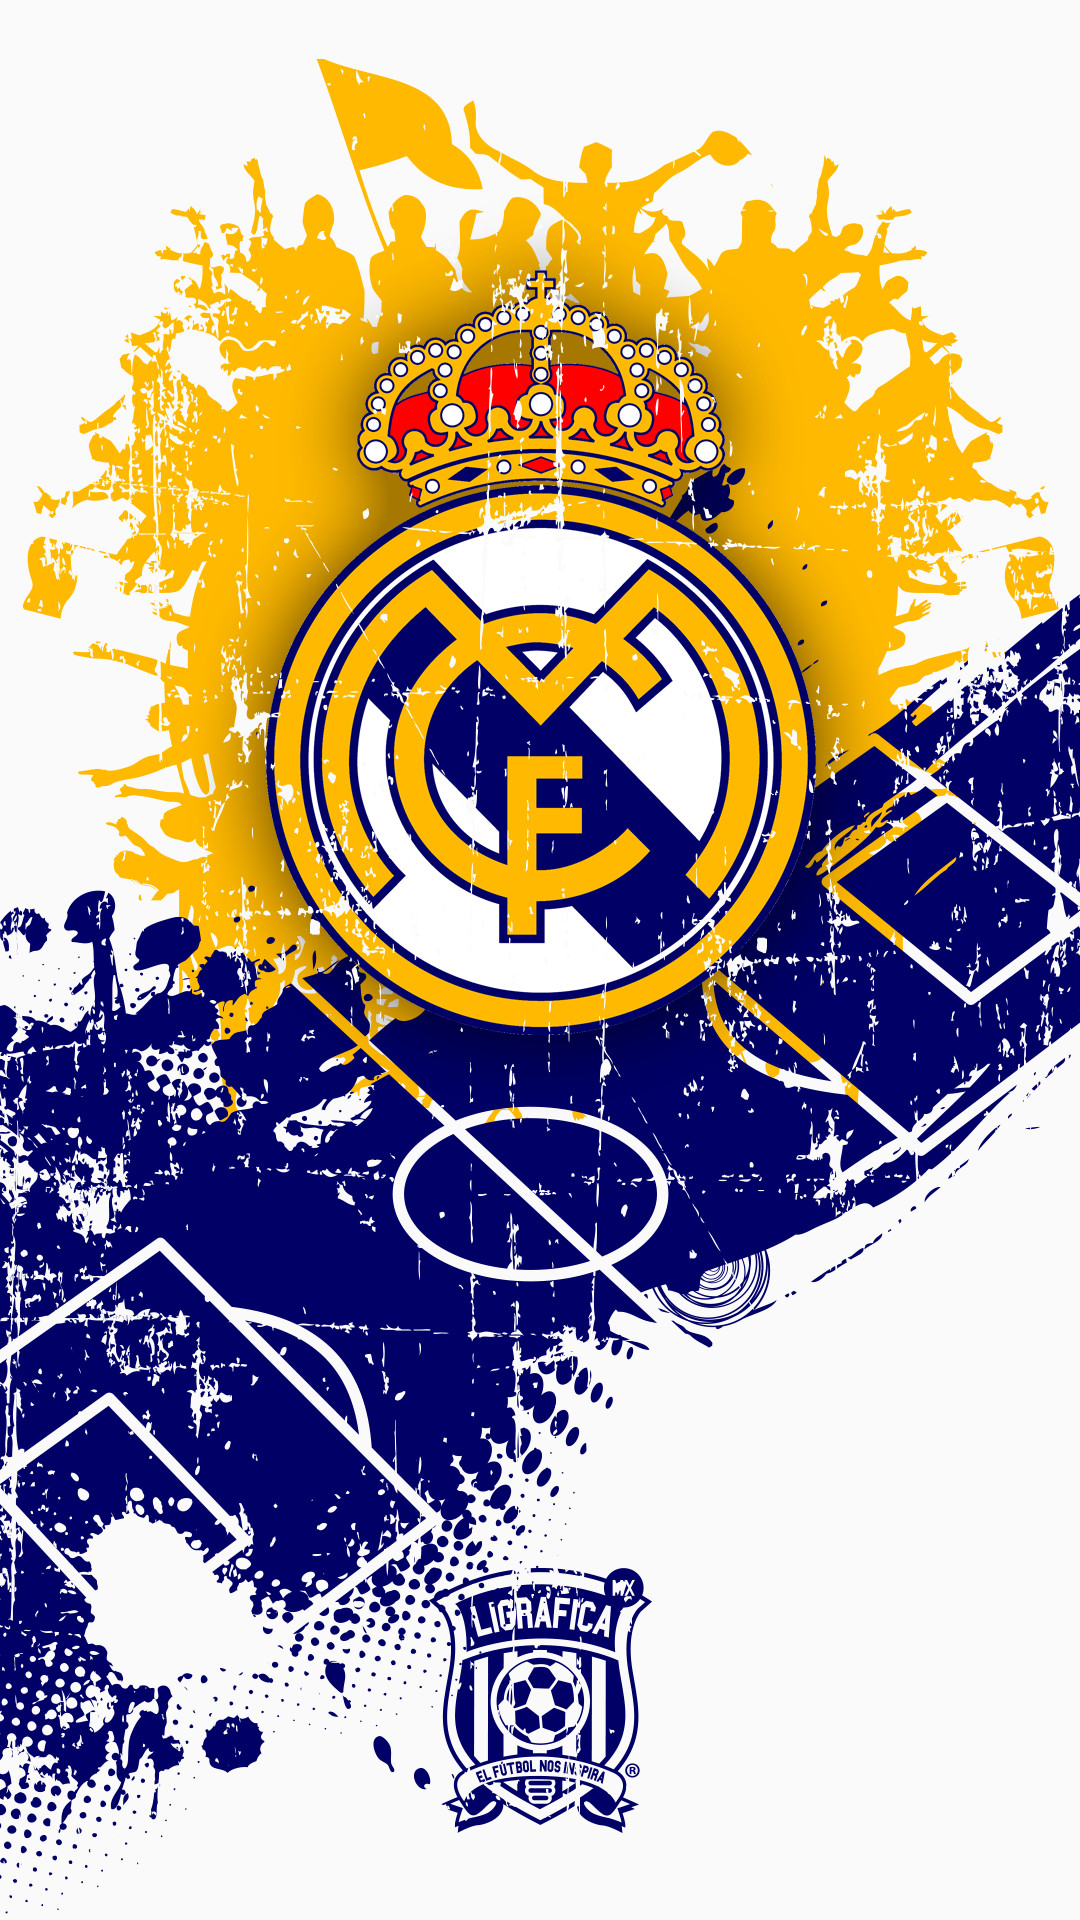 1080x1920 #LigraficaMX 14/04/15CTG Â· Cristiano Ronaldo WallpapersReal Madrid ...